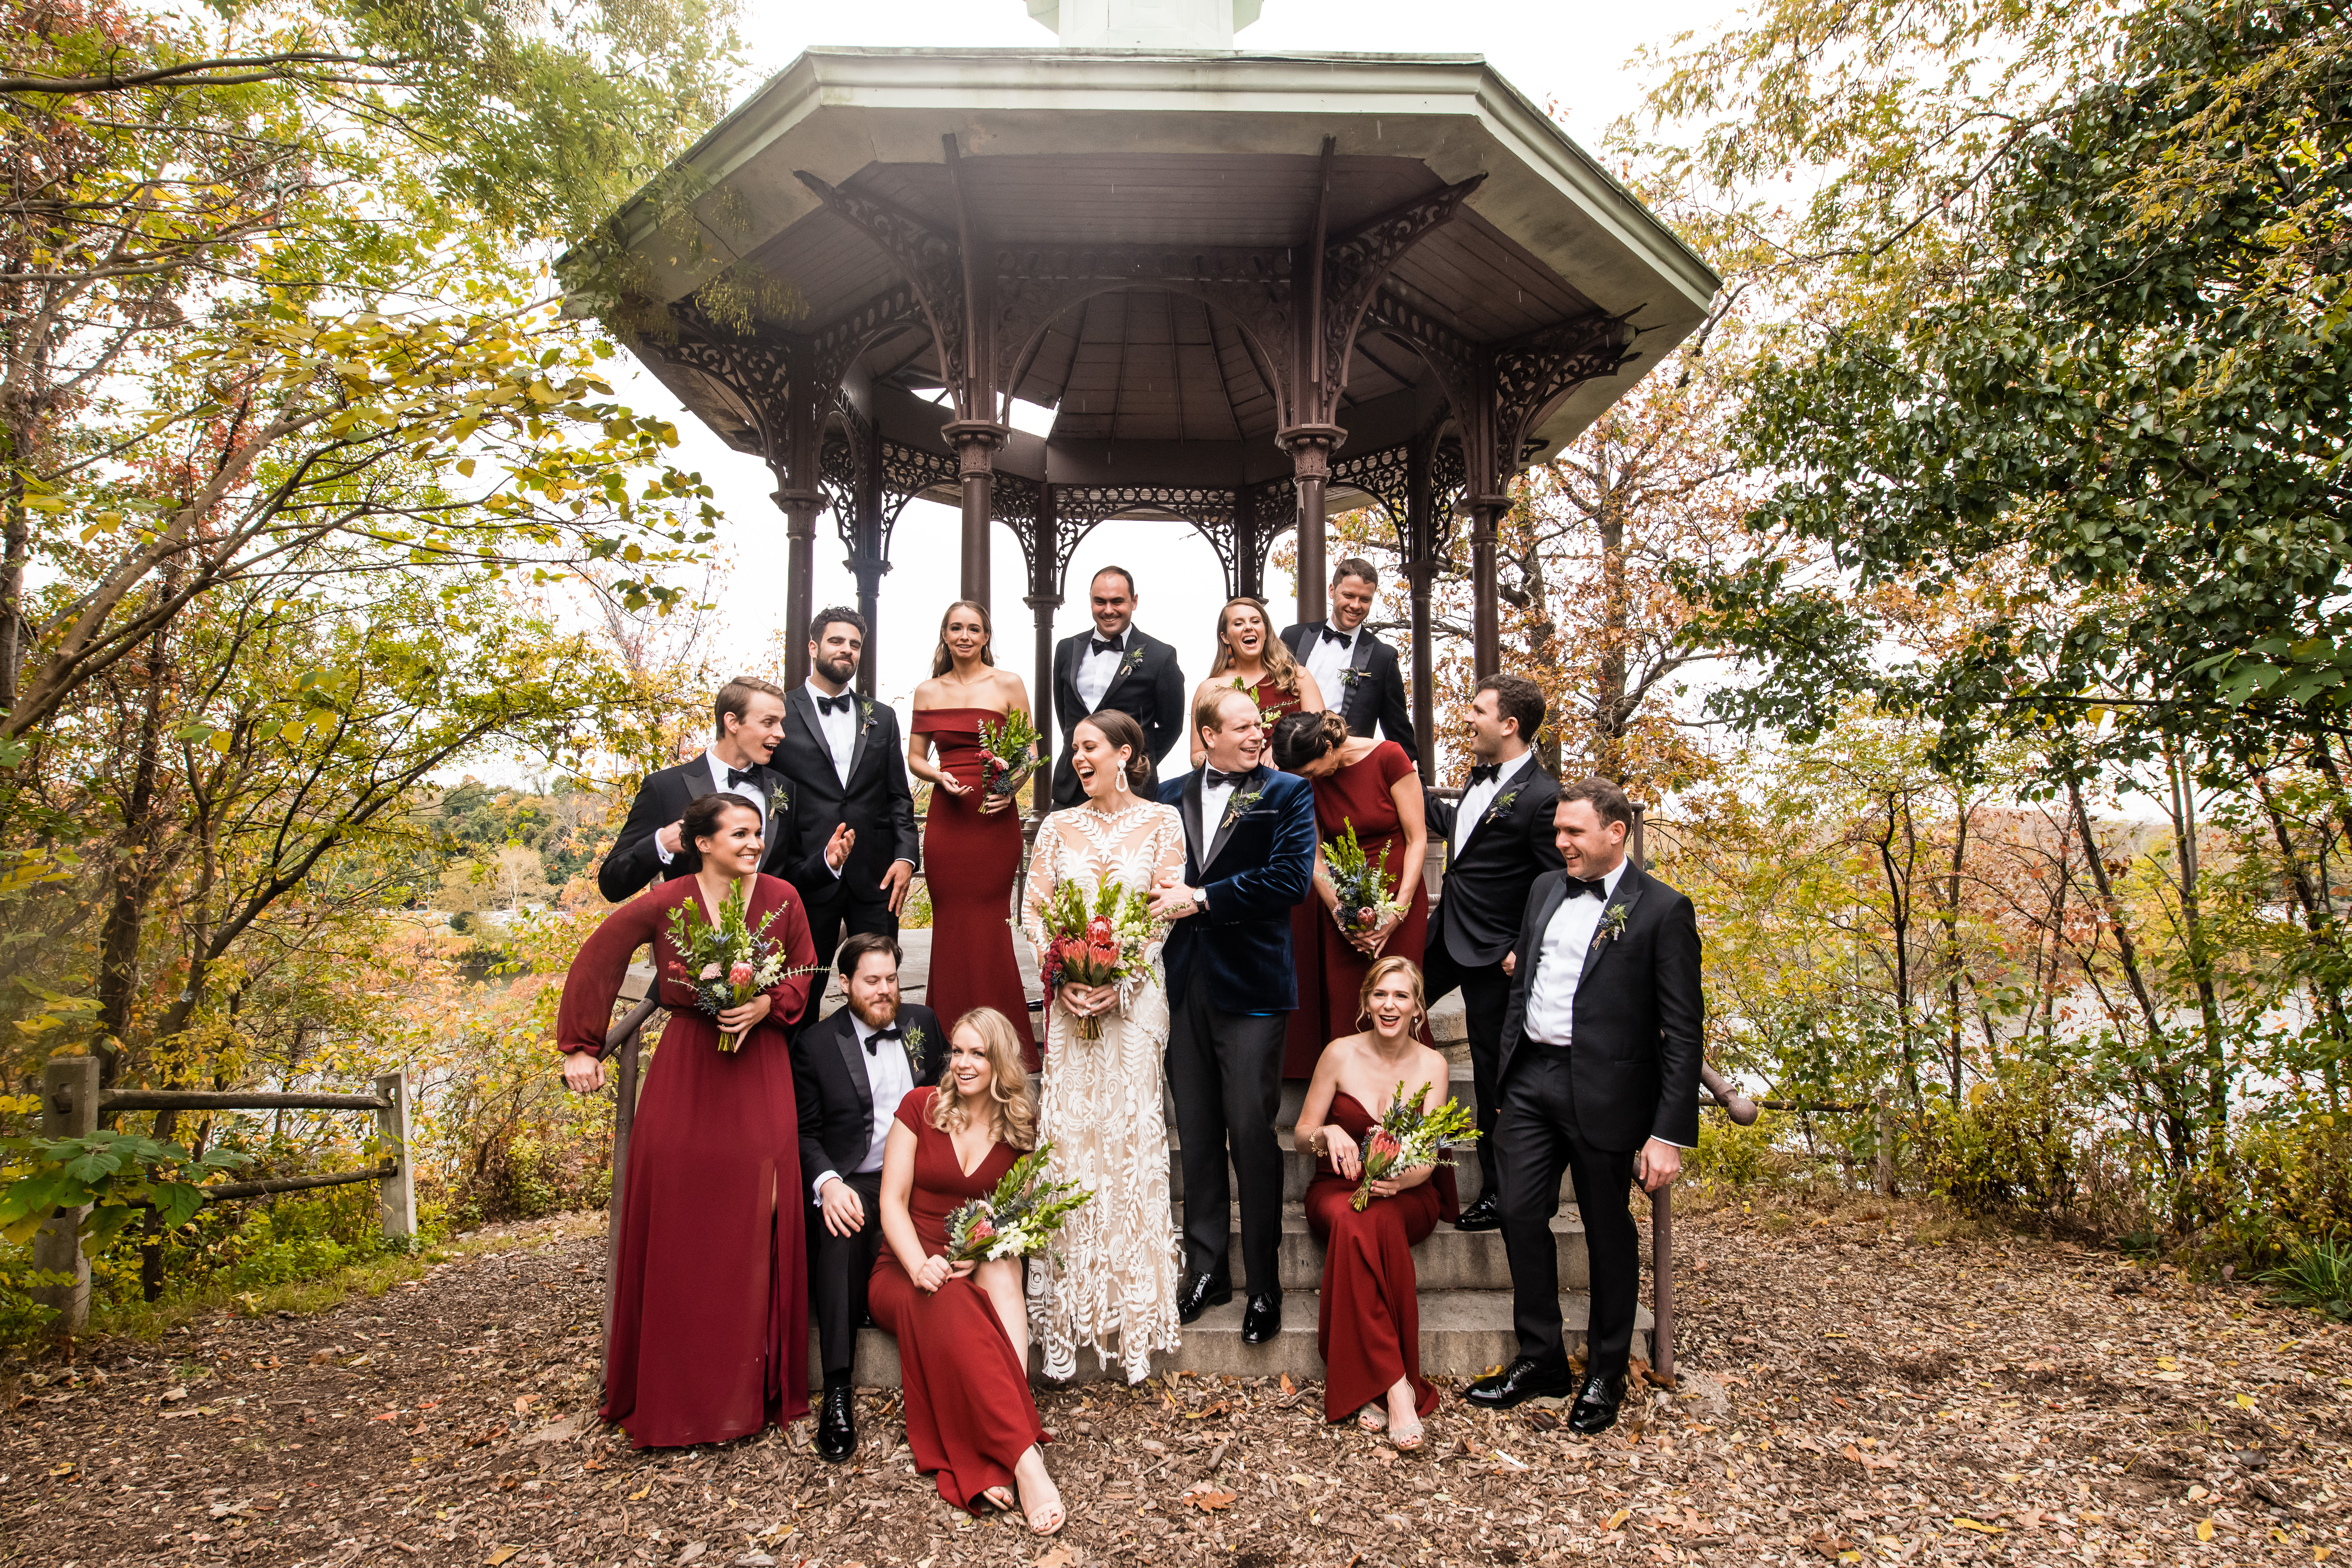 Wedding portraits with autumn scenery